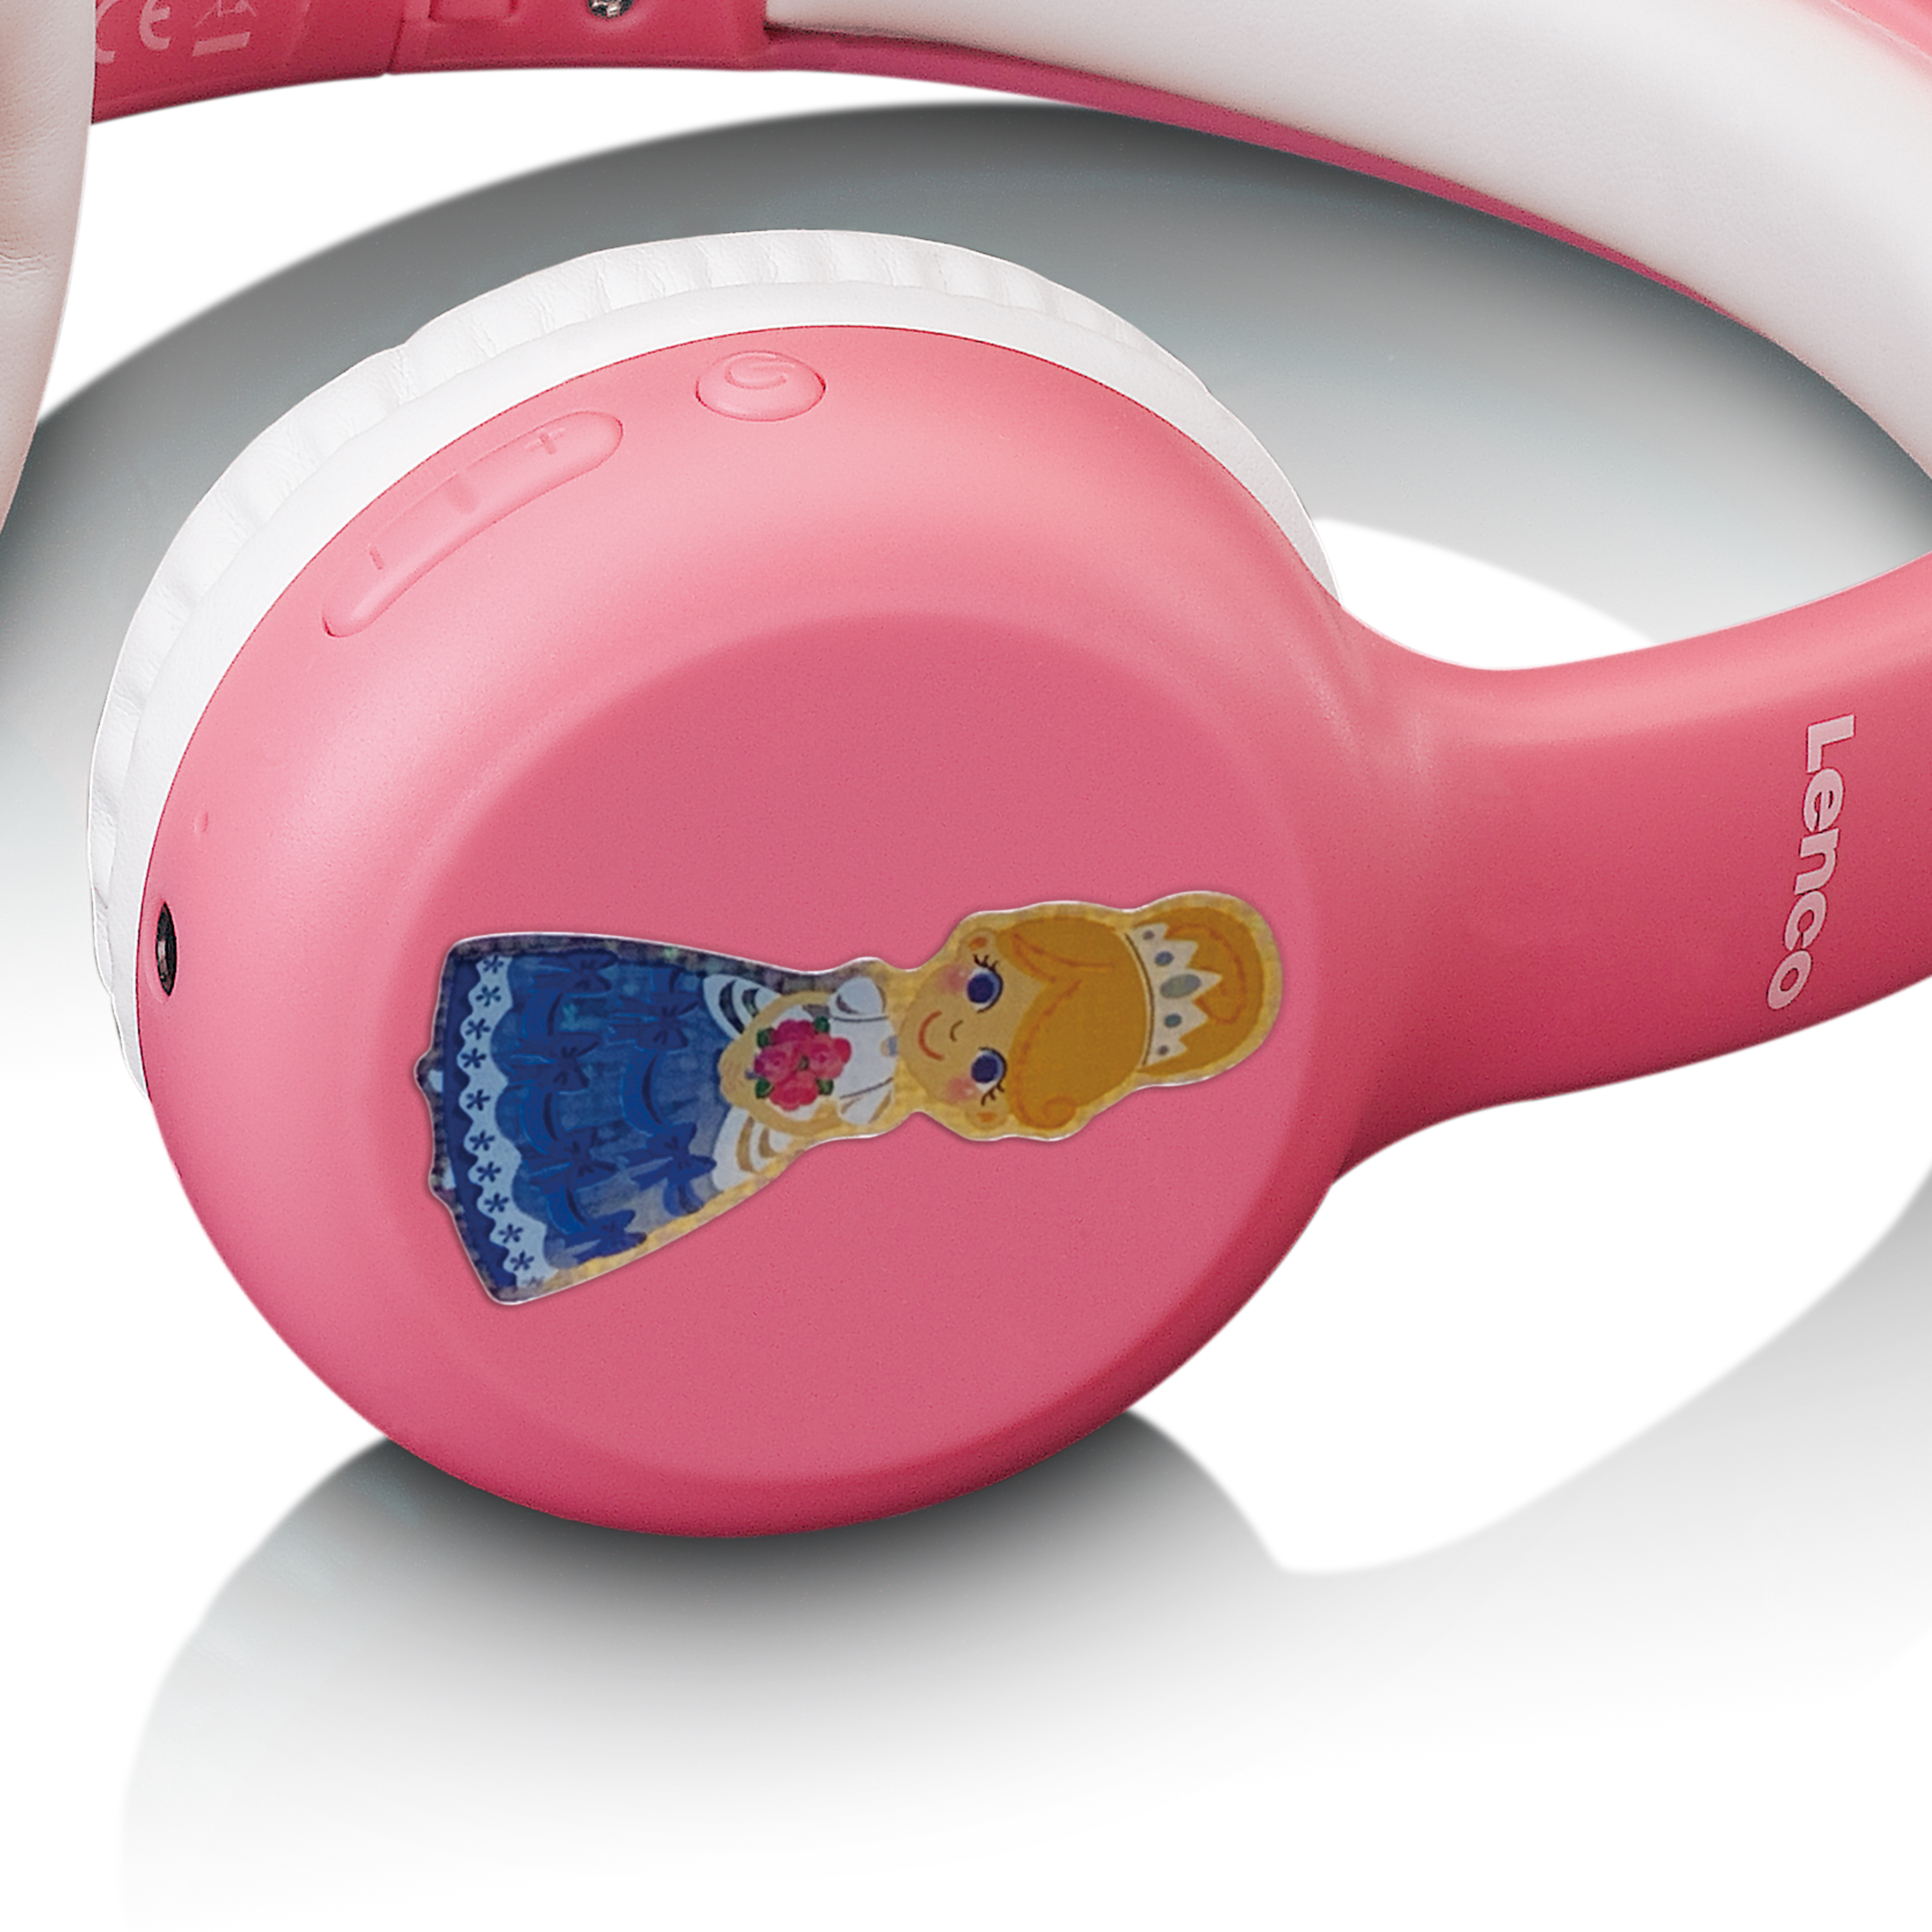 LENCO HPB-110PK - faltbare Bluetooth Pink Headphone On-ear Kinder, Bluetooth